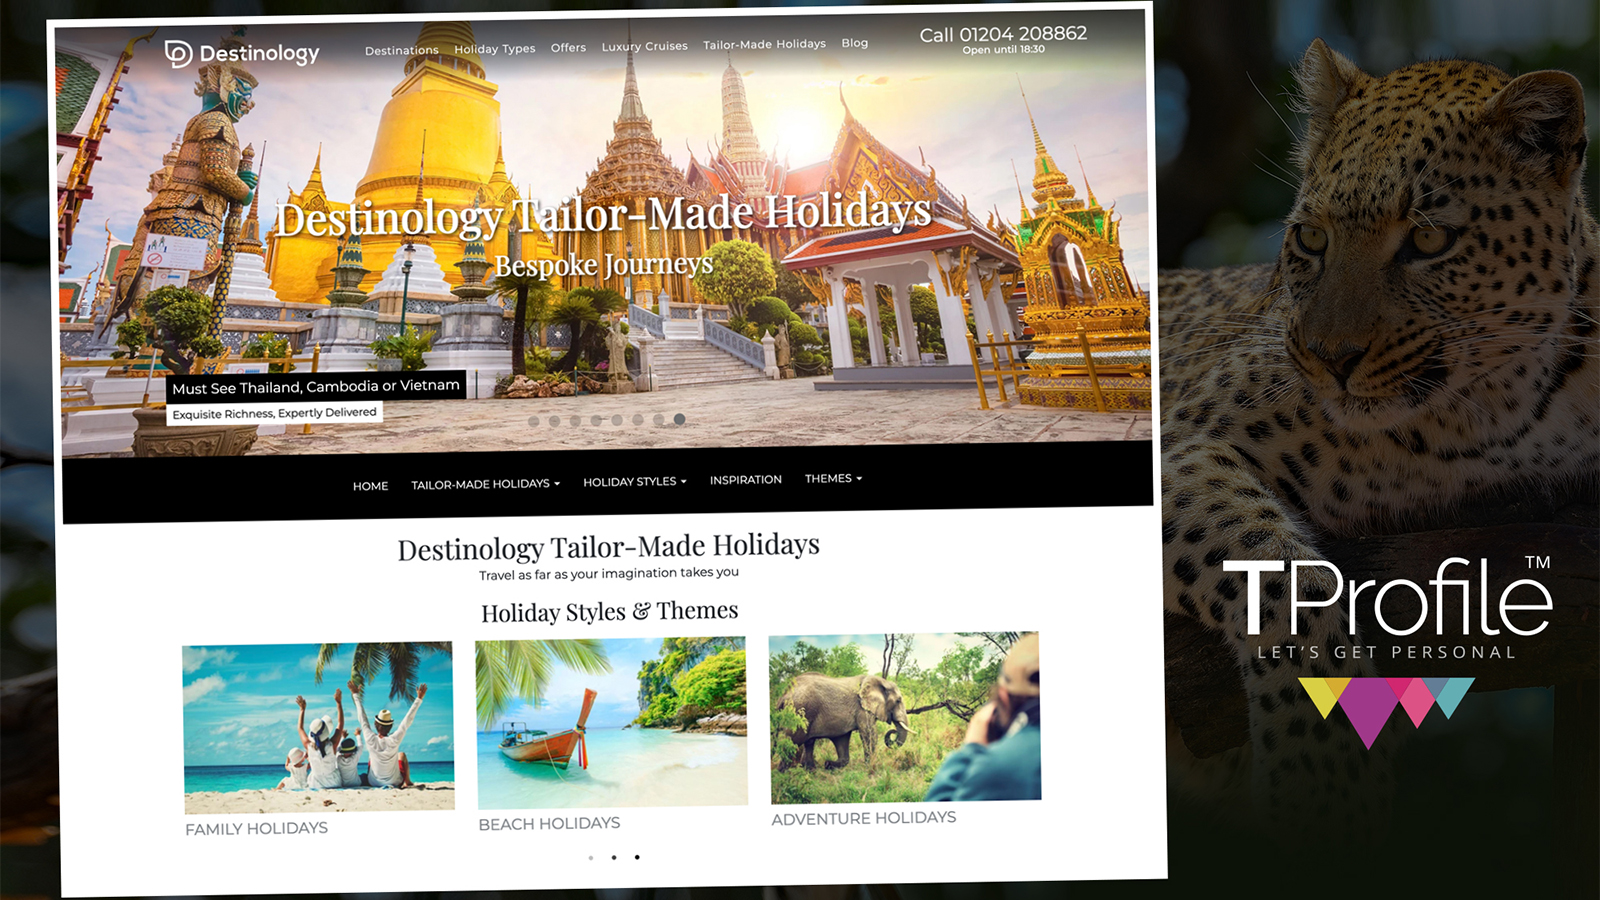 Destinology Tailor-Made HolidaysStewart Travel Group